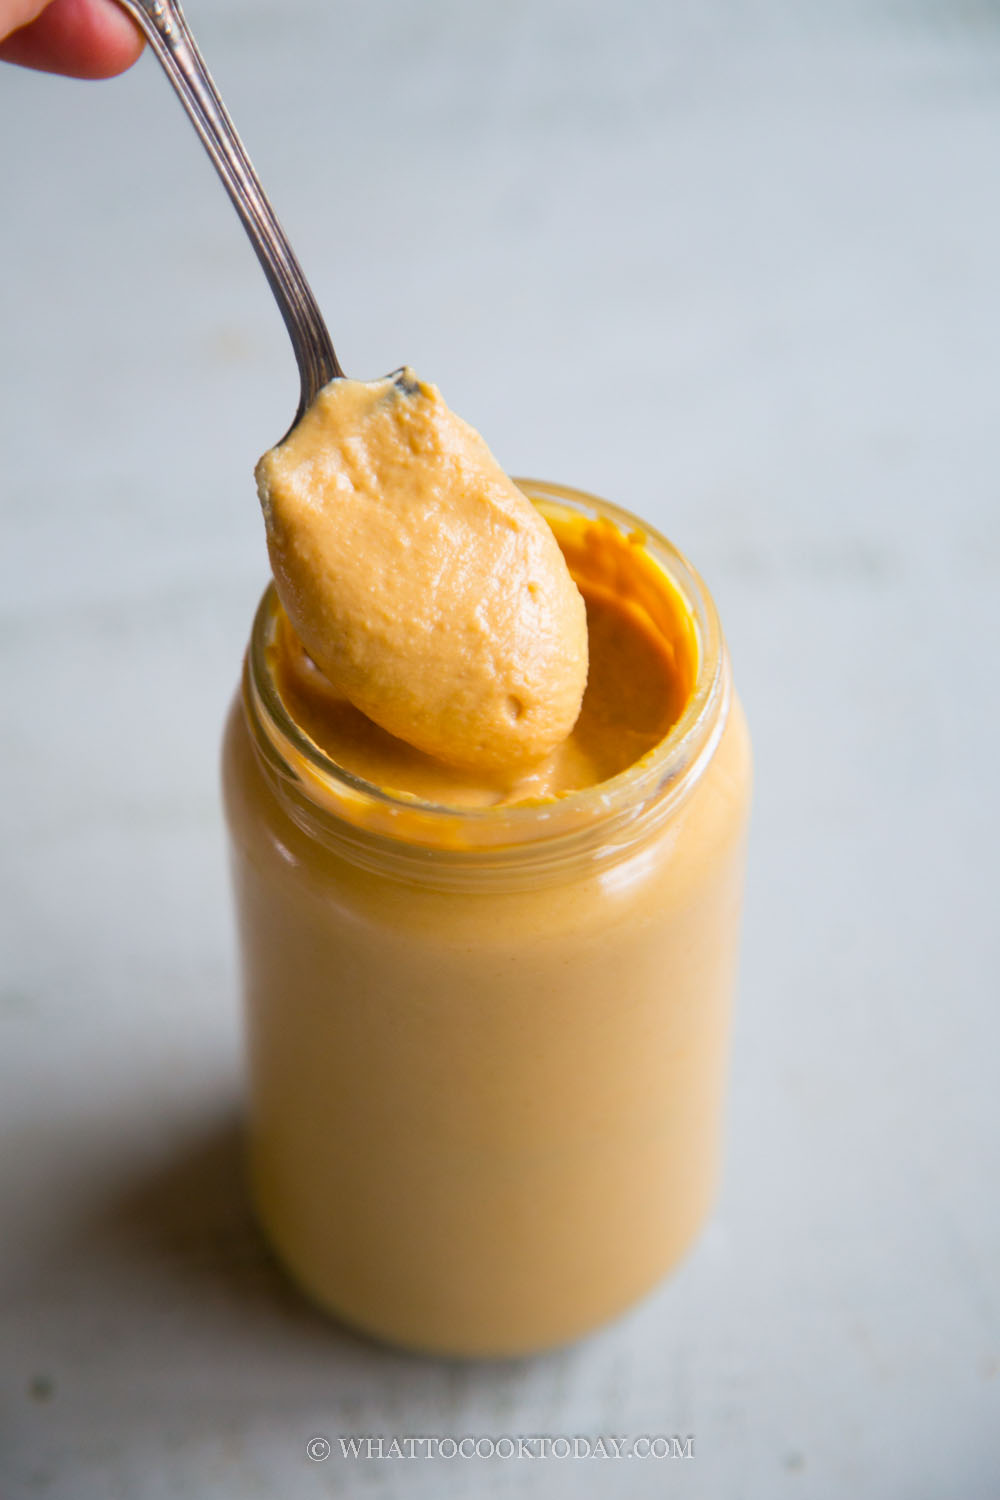 Healthy Low-Calorie, Low-Fat Peanut Butter